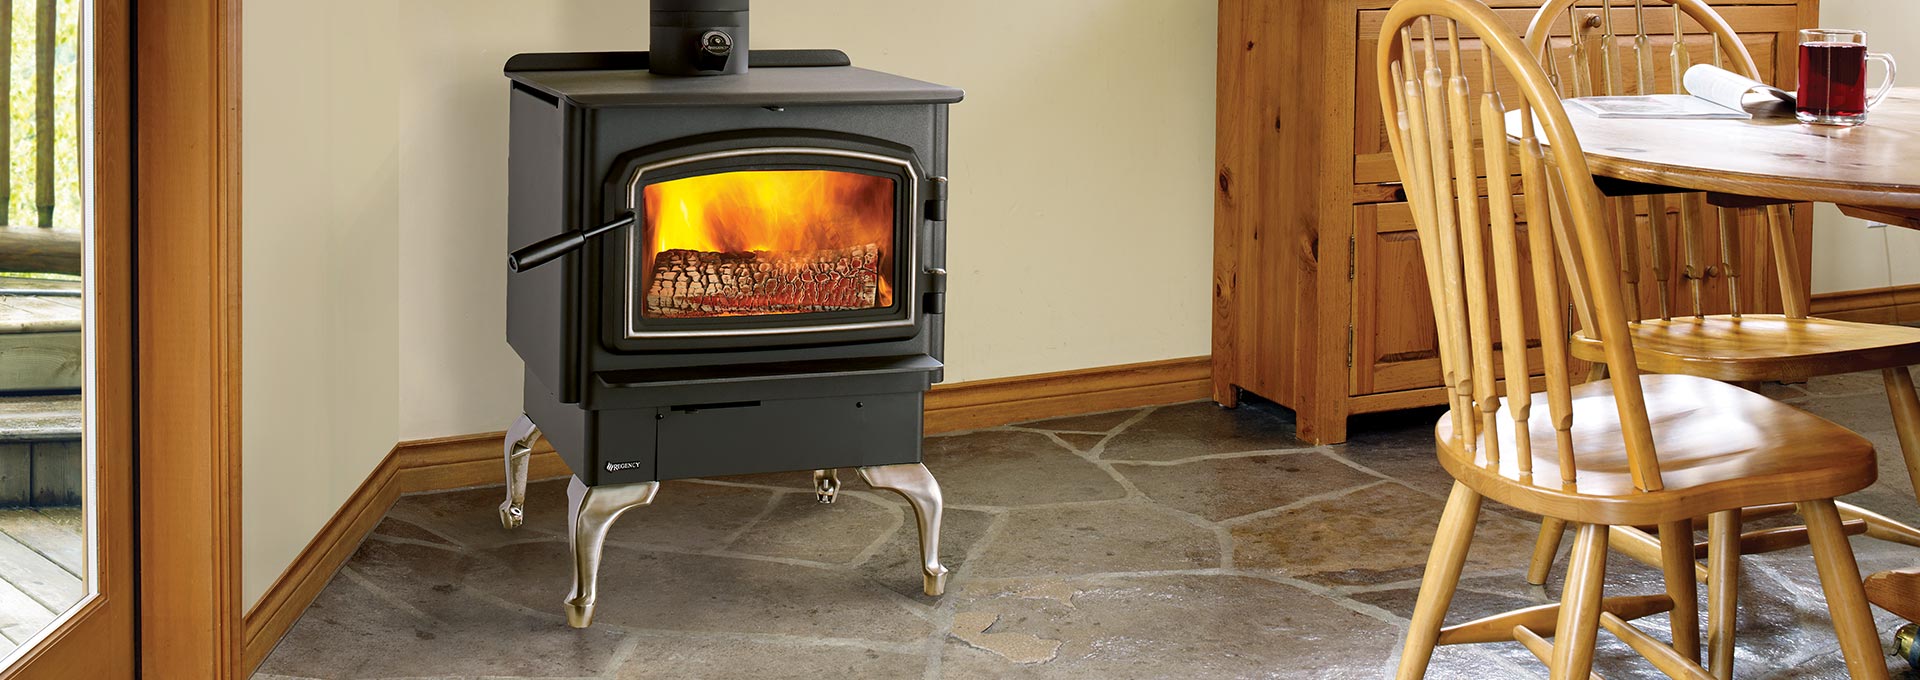 Wood Pellet Fireplace Insert Best Of Wood Stoves